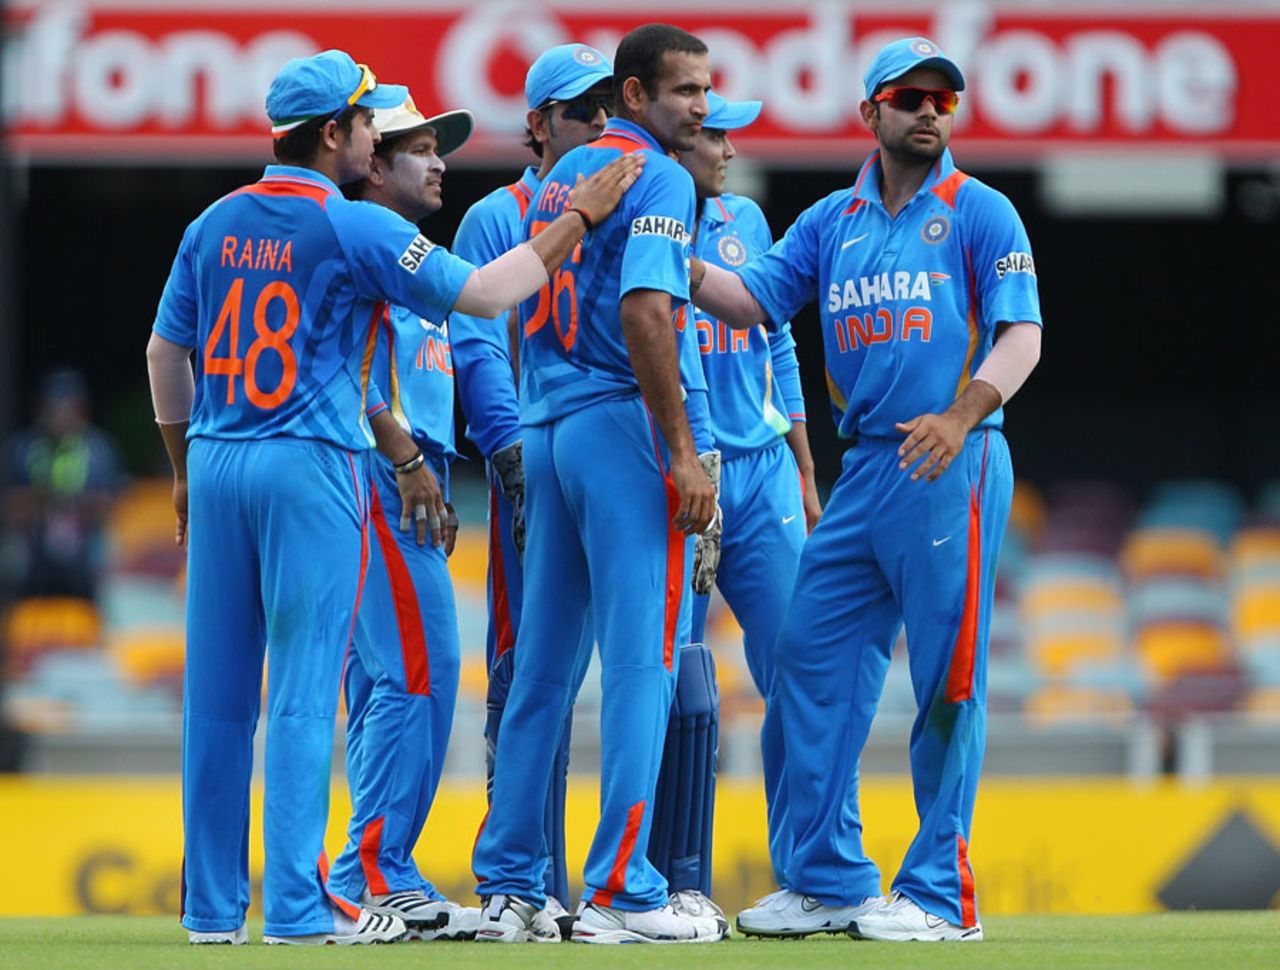 Irfan Pathan got the wicket of David Warner, Australia v India, CB Series, Brisbane, February 19, 2012